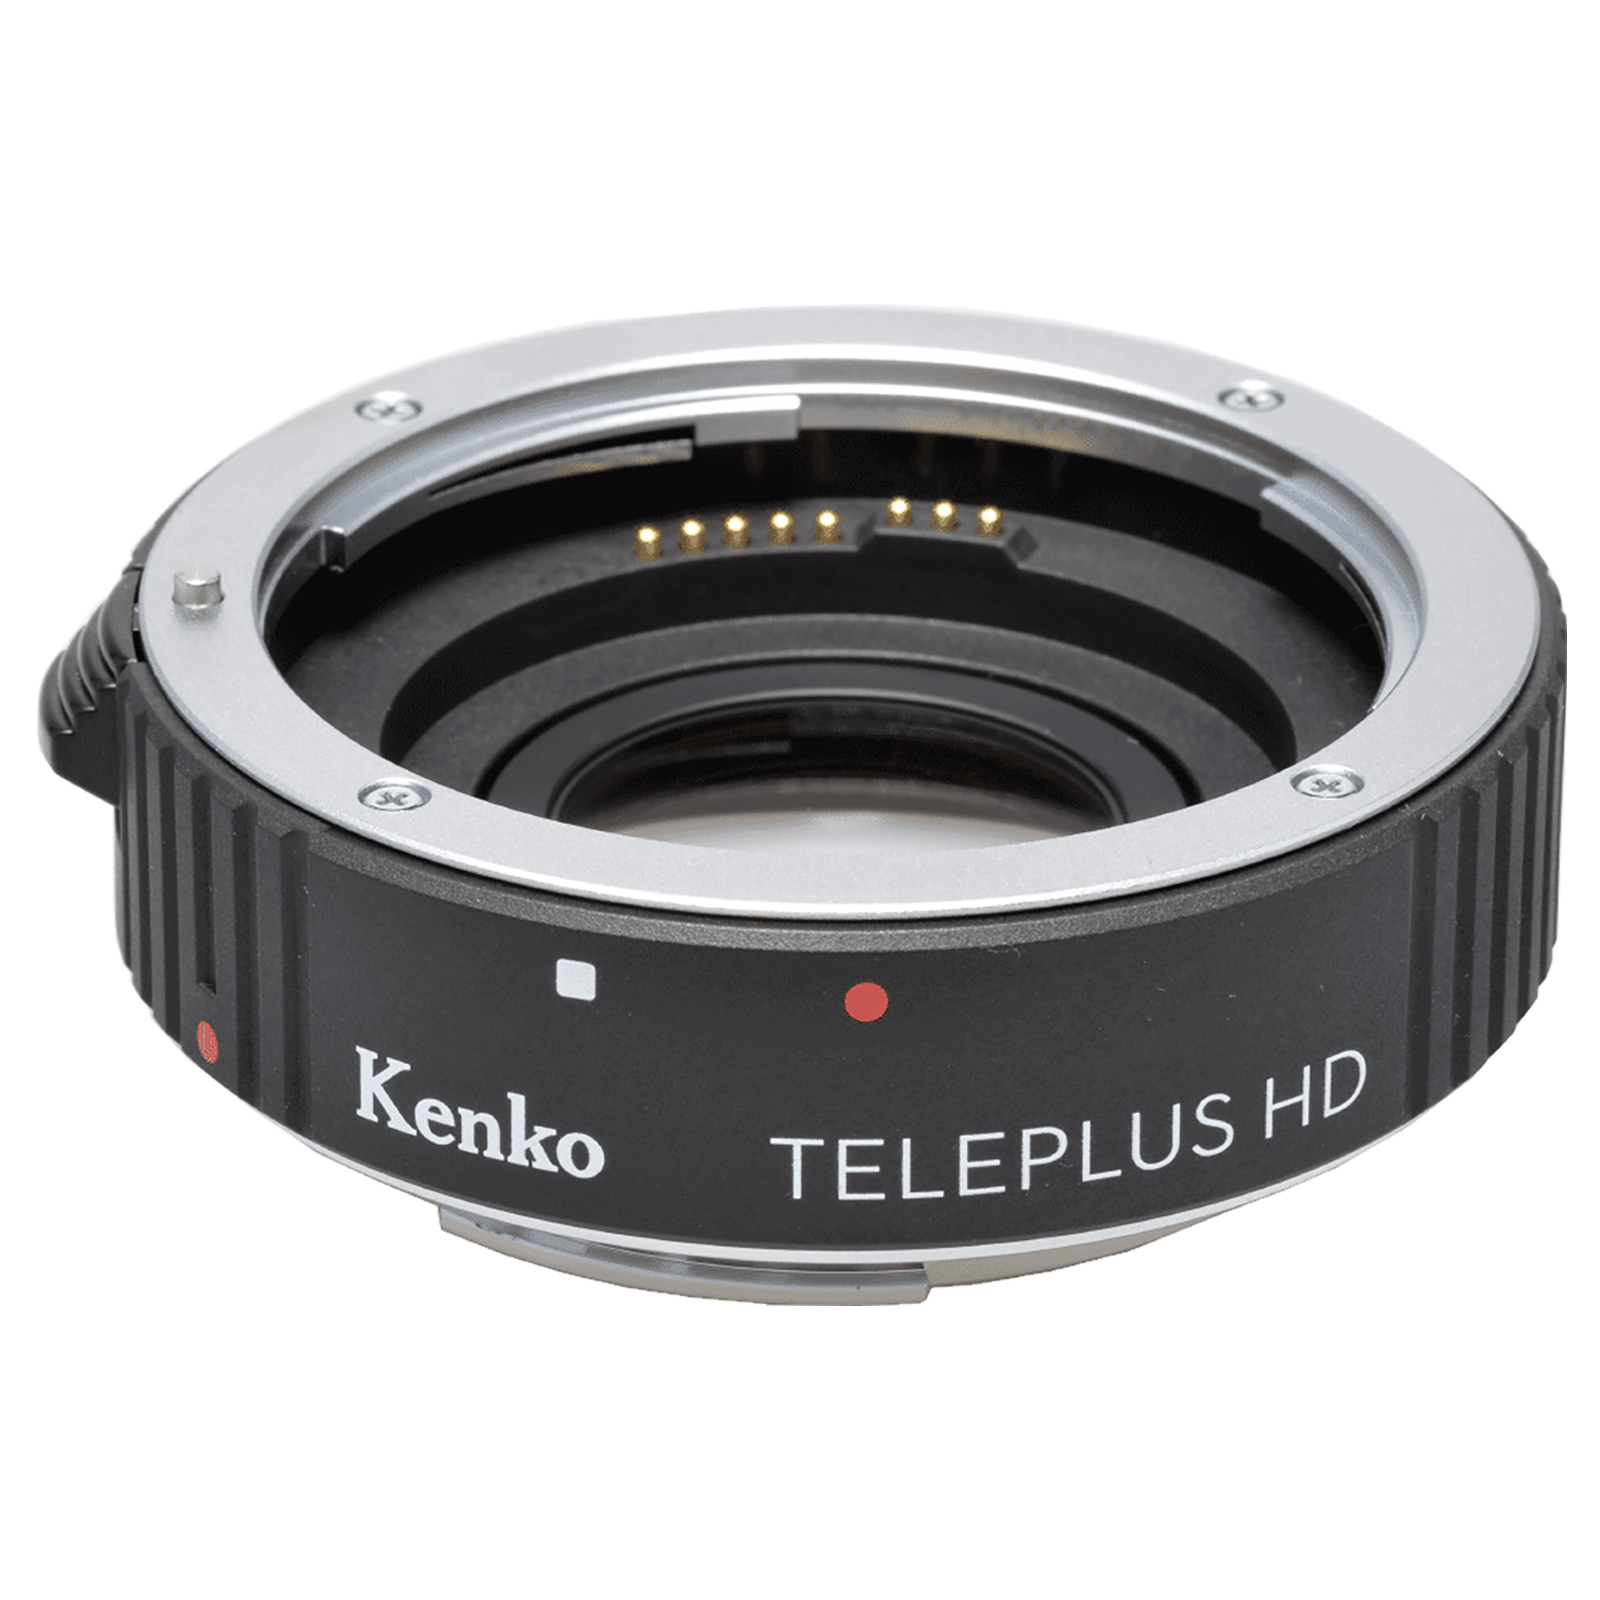 Kenko TELEPLUS HD Lens Extender (High Quality Optical Elements, 062523, Black)_1